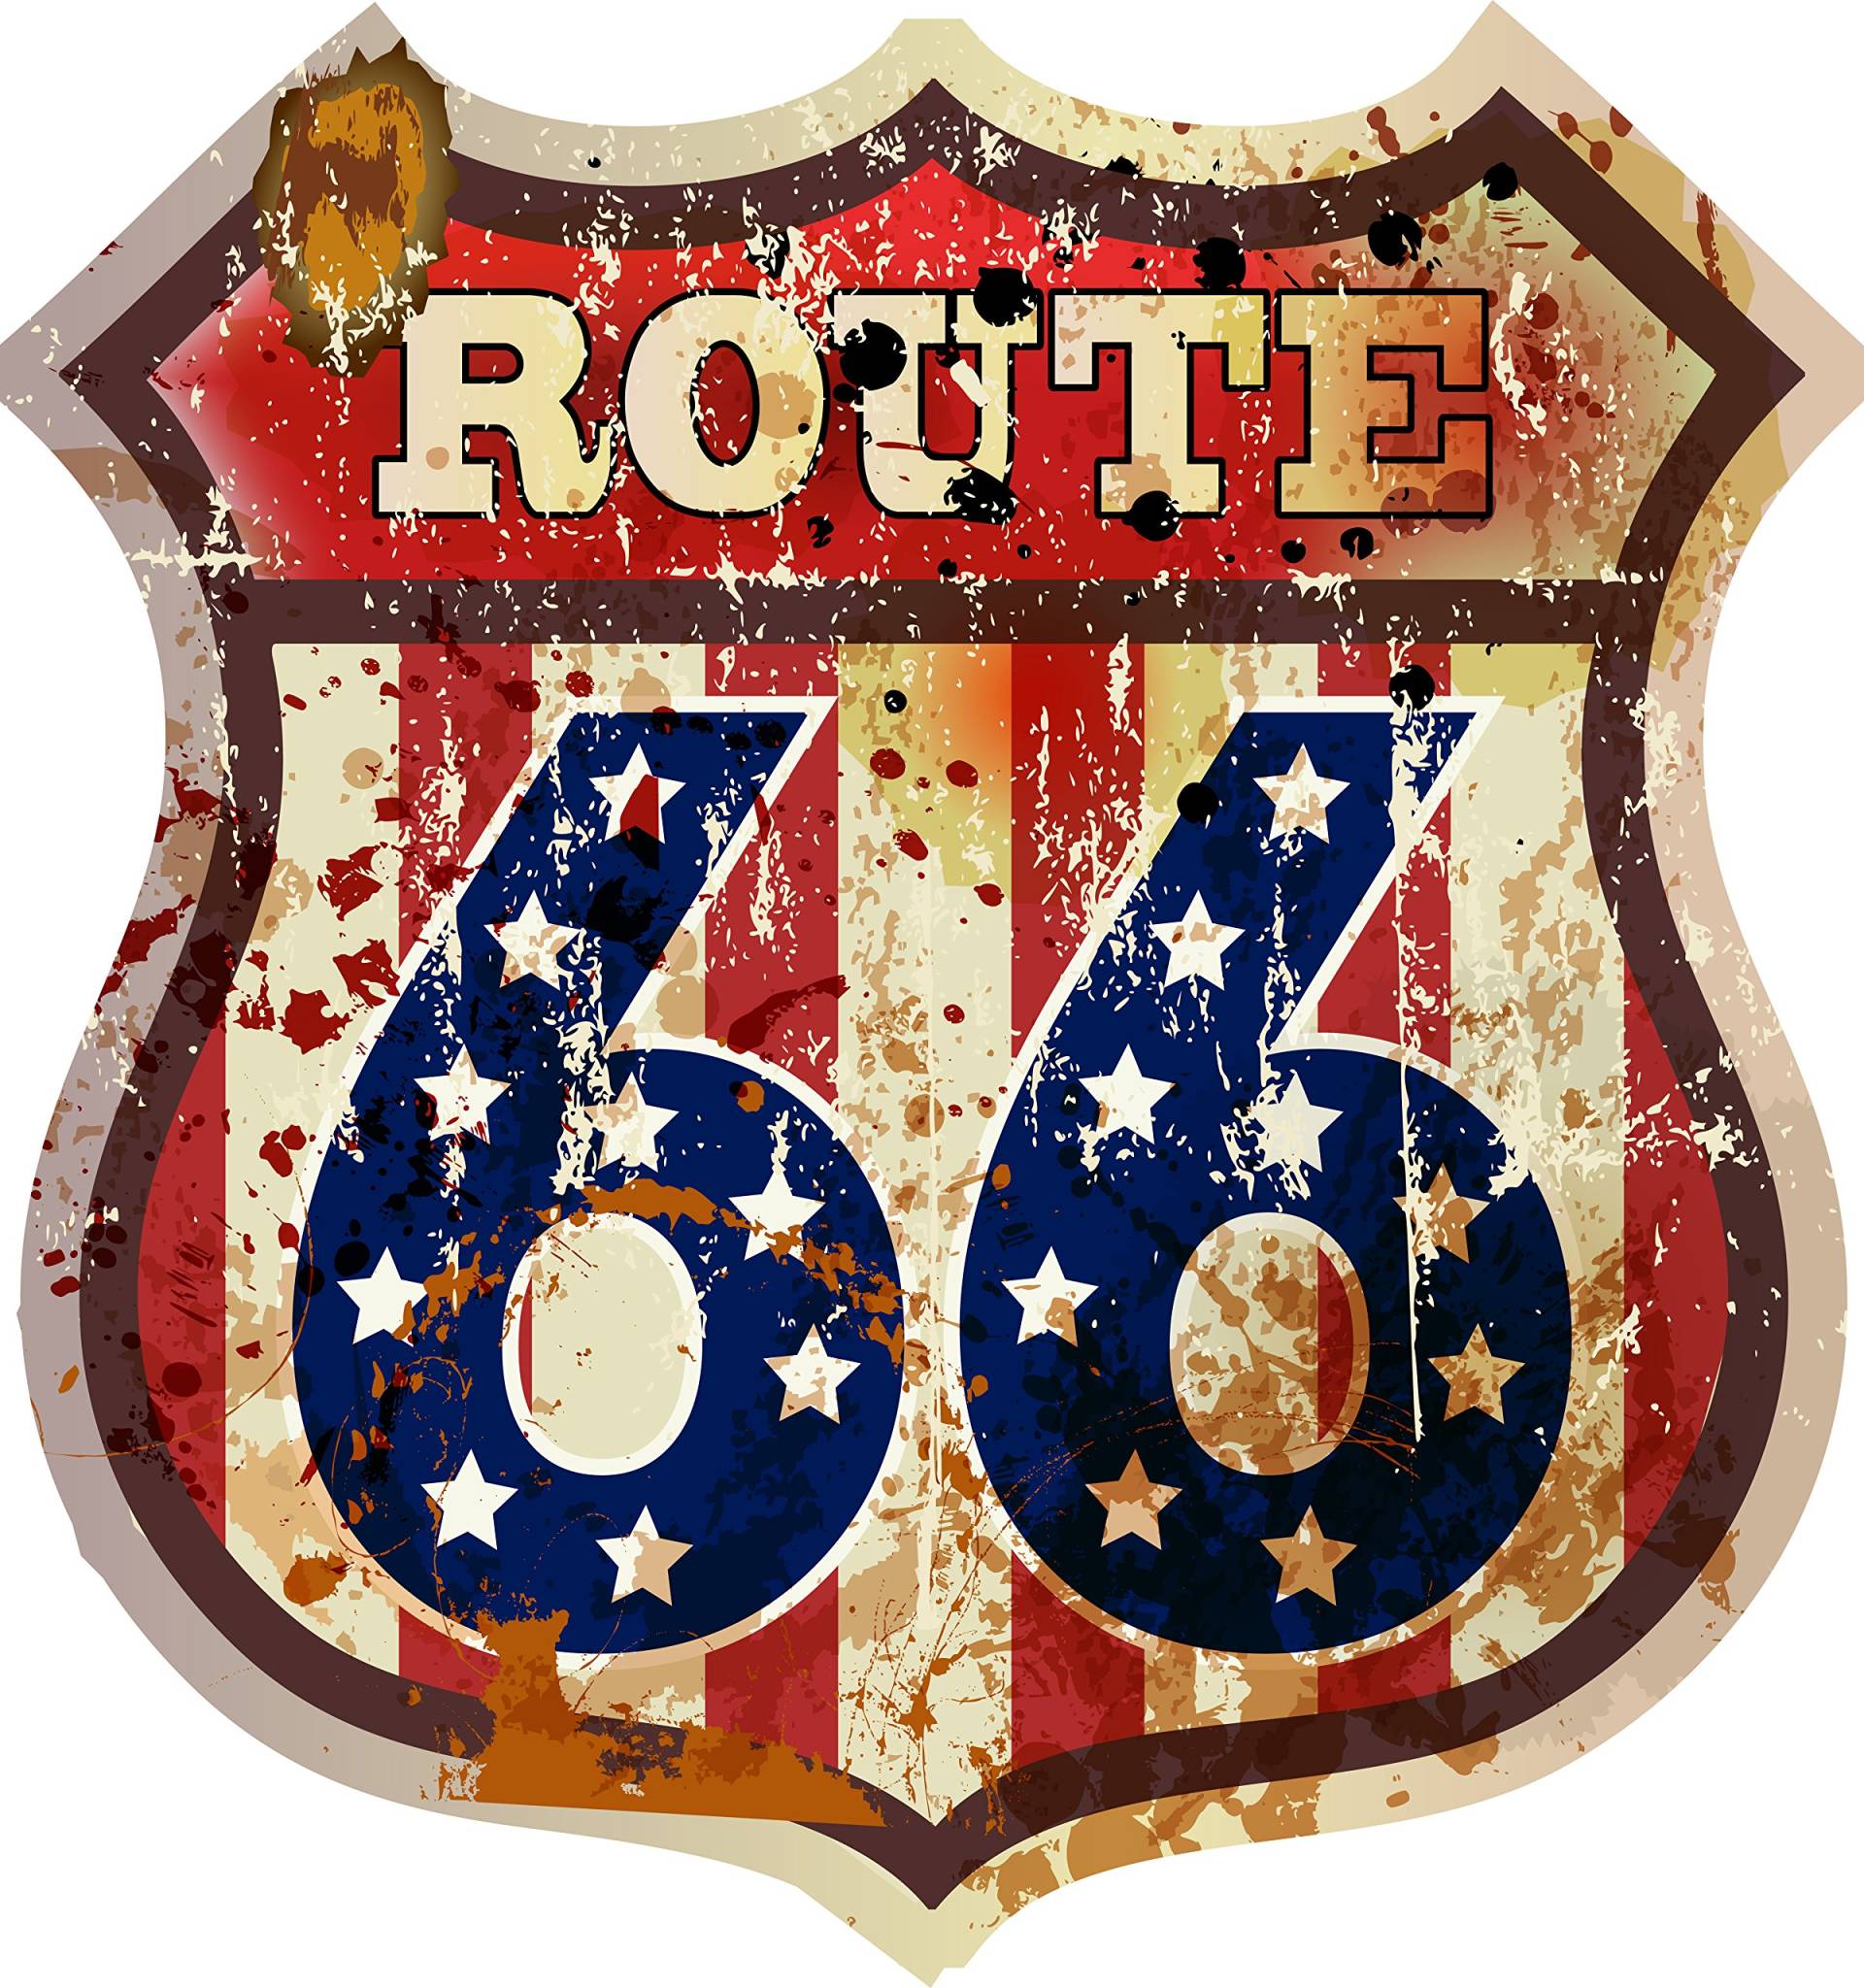 Etaia 9,5x10 cm - Auto Aufkleber Wappen Route 66 USA Vintage Retro Old School Motorcycles Sticker Motorrad Bike Biker von Etaia